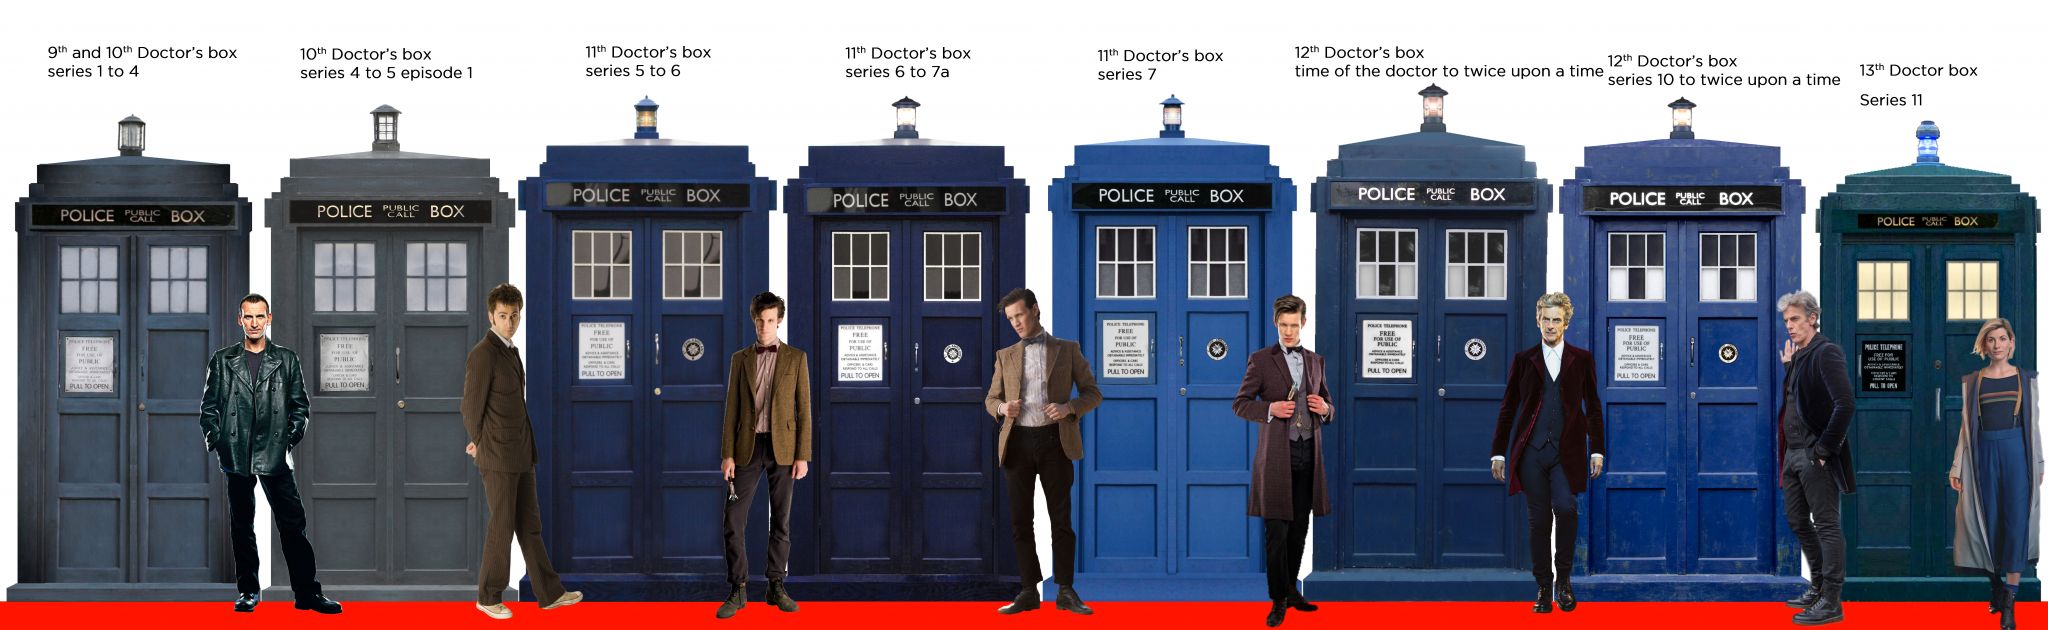 Modern TARDIS box line up .jpg